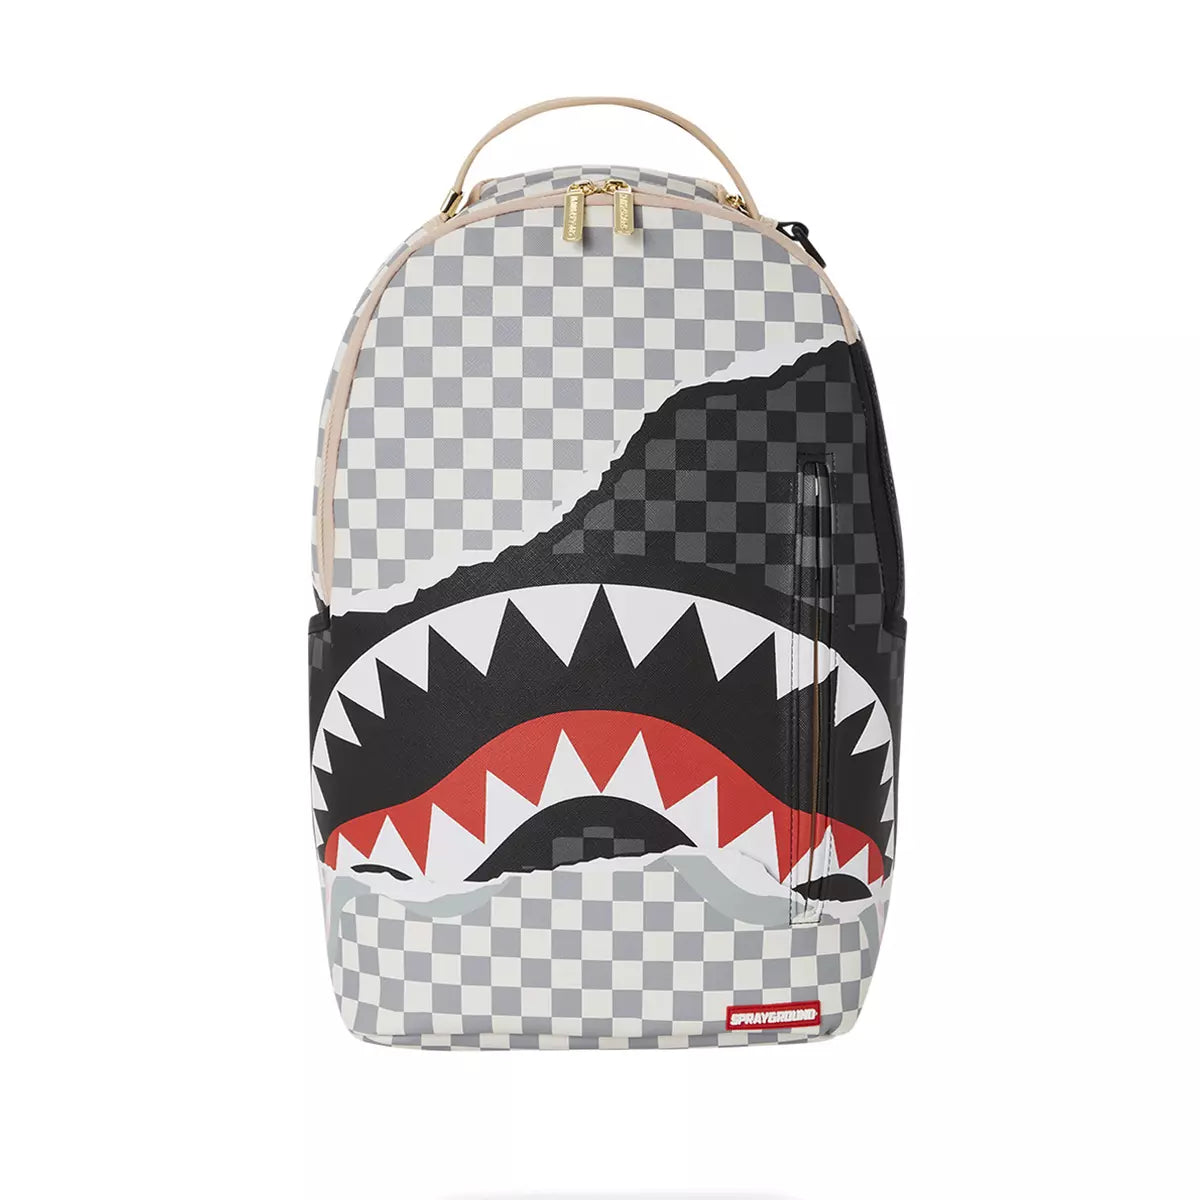 Sprayground Black Sharks in Paris Backpack - Accessories from